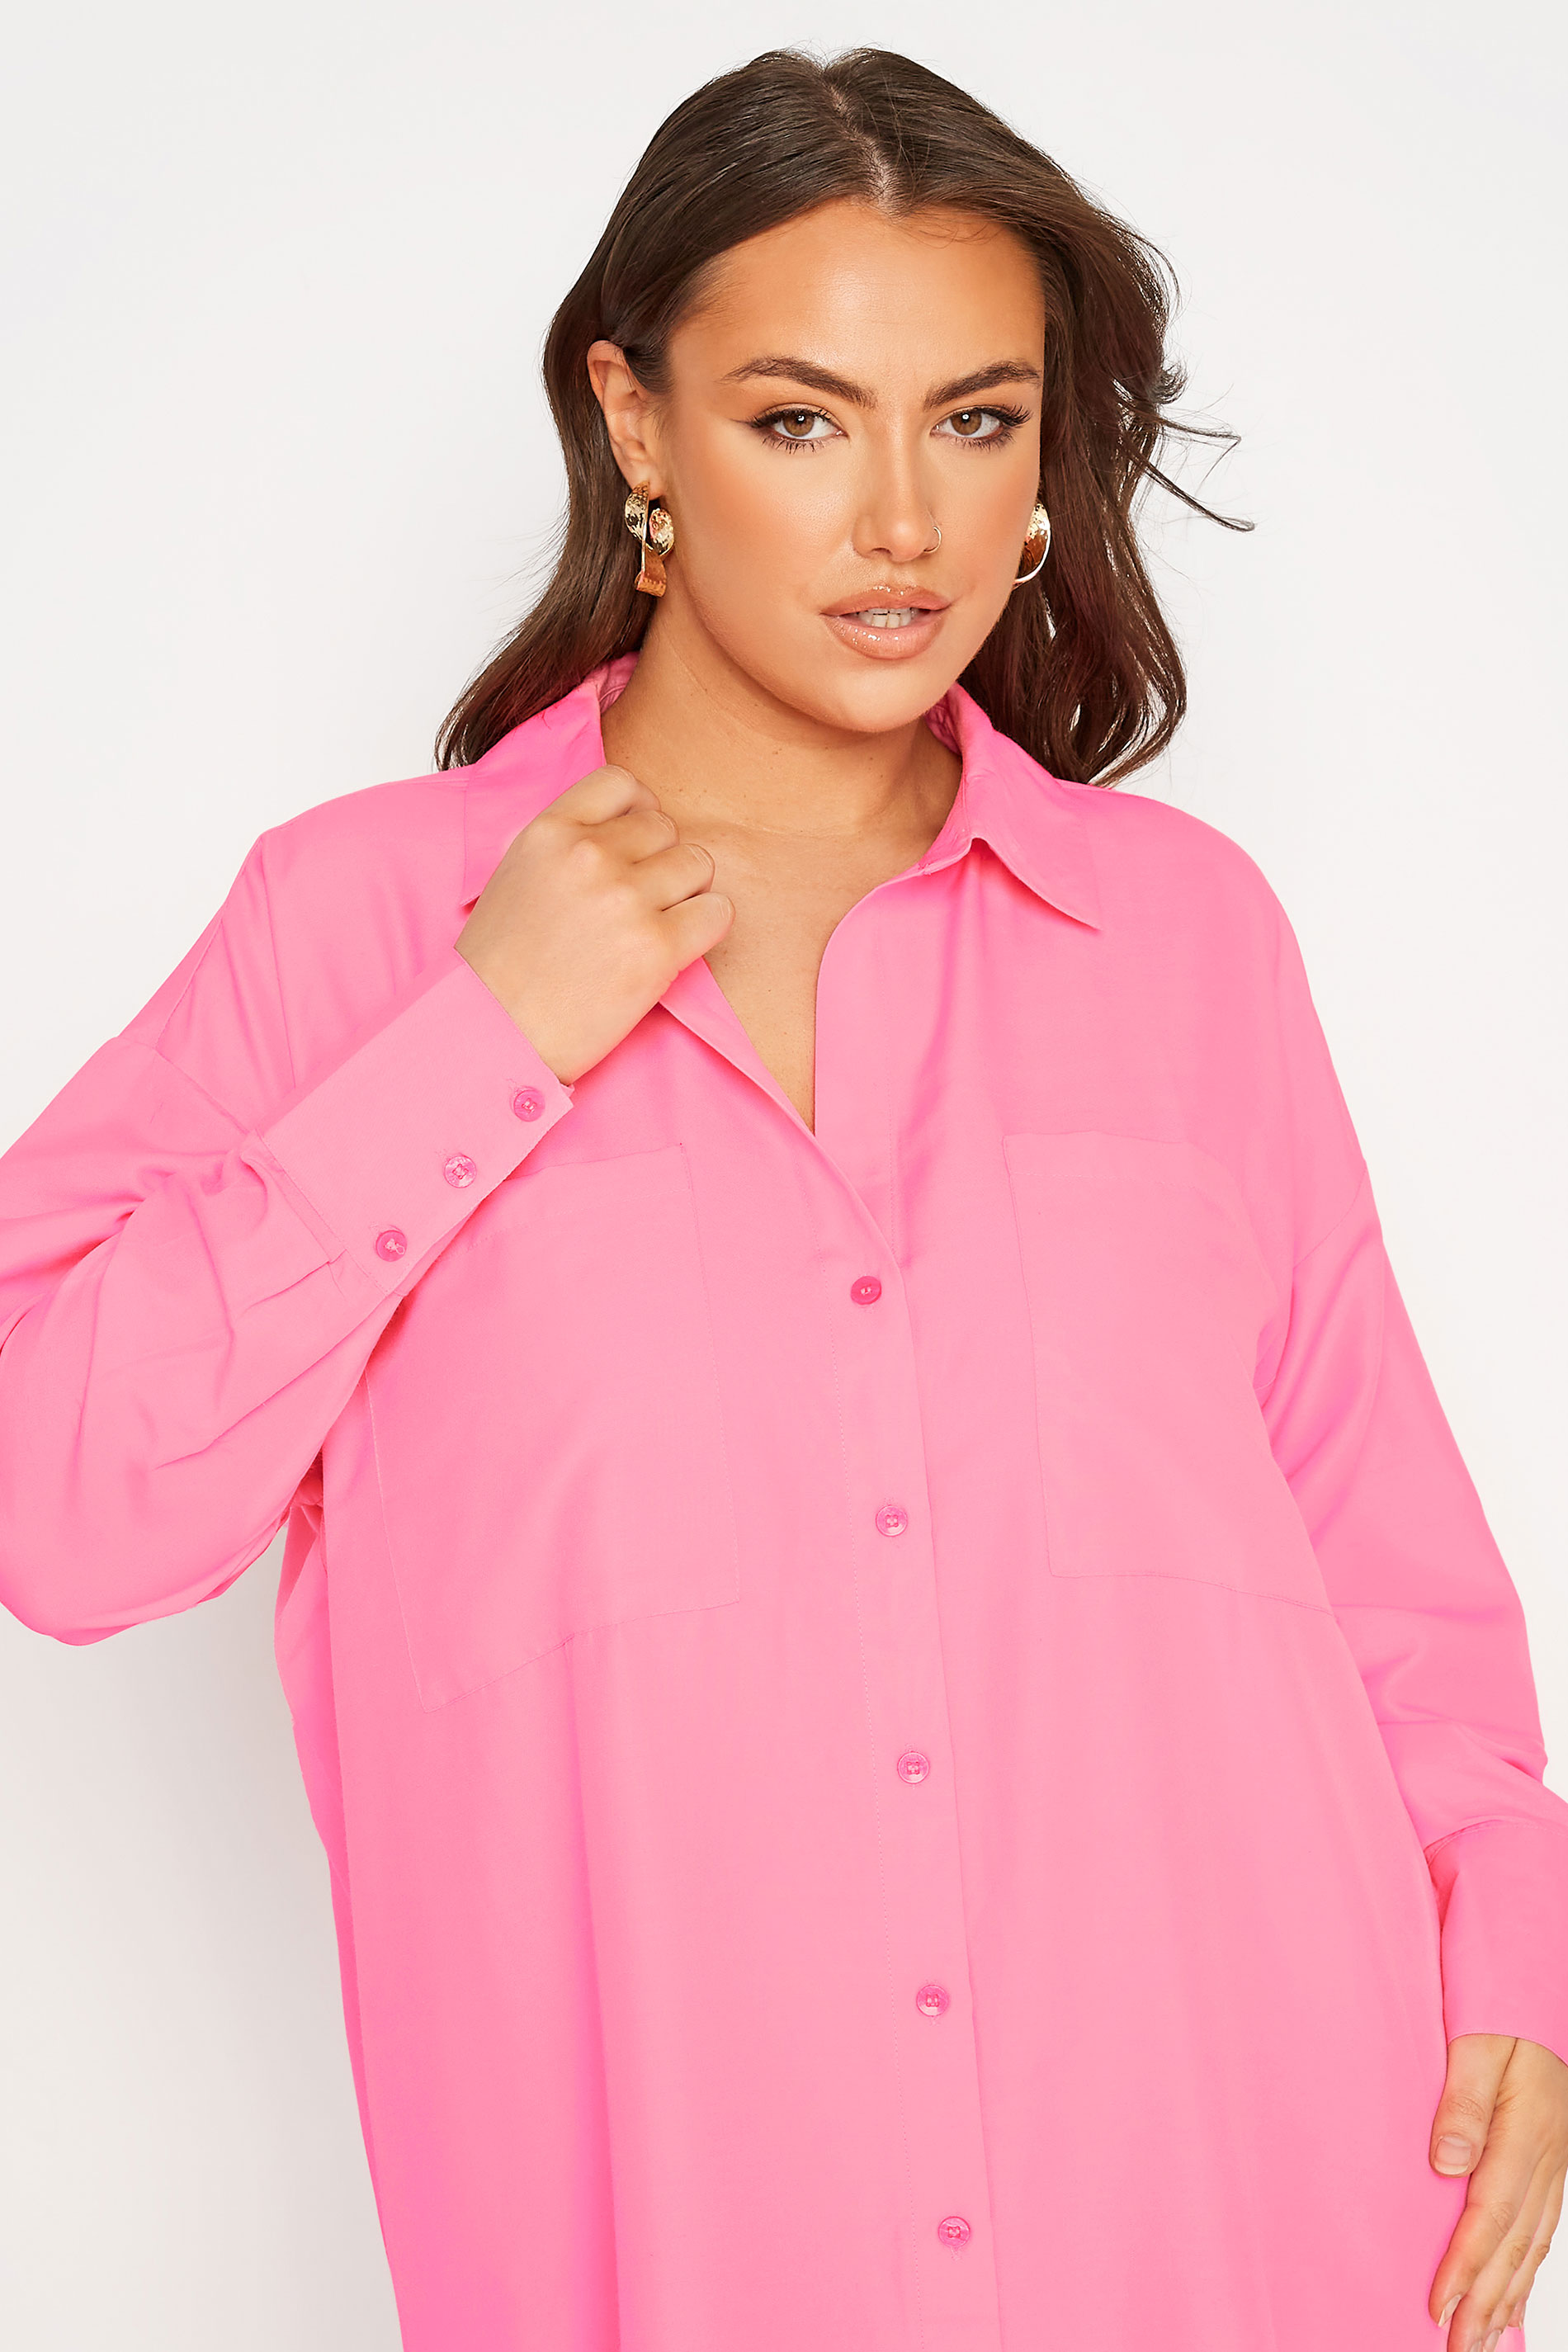 Malibu Neon Pink Comfort Colors T-shirt - cutandcropped